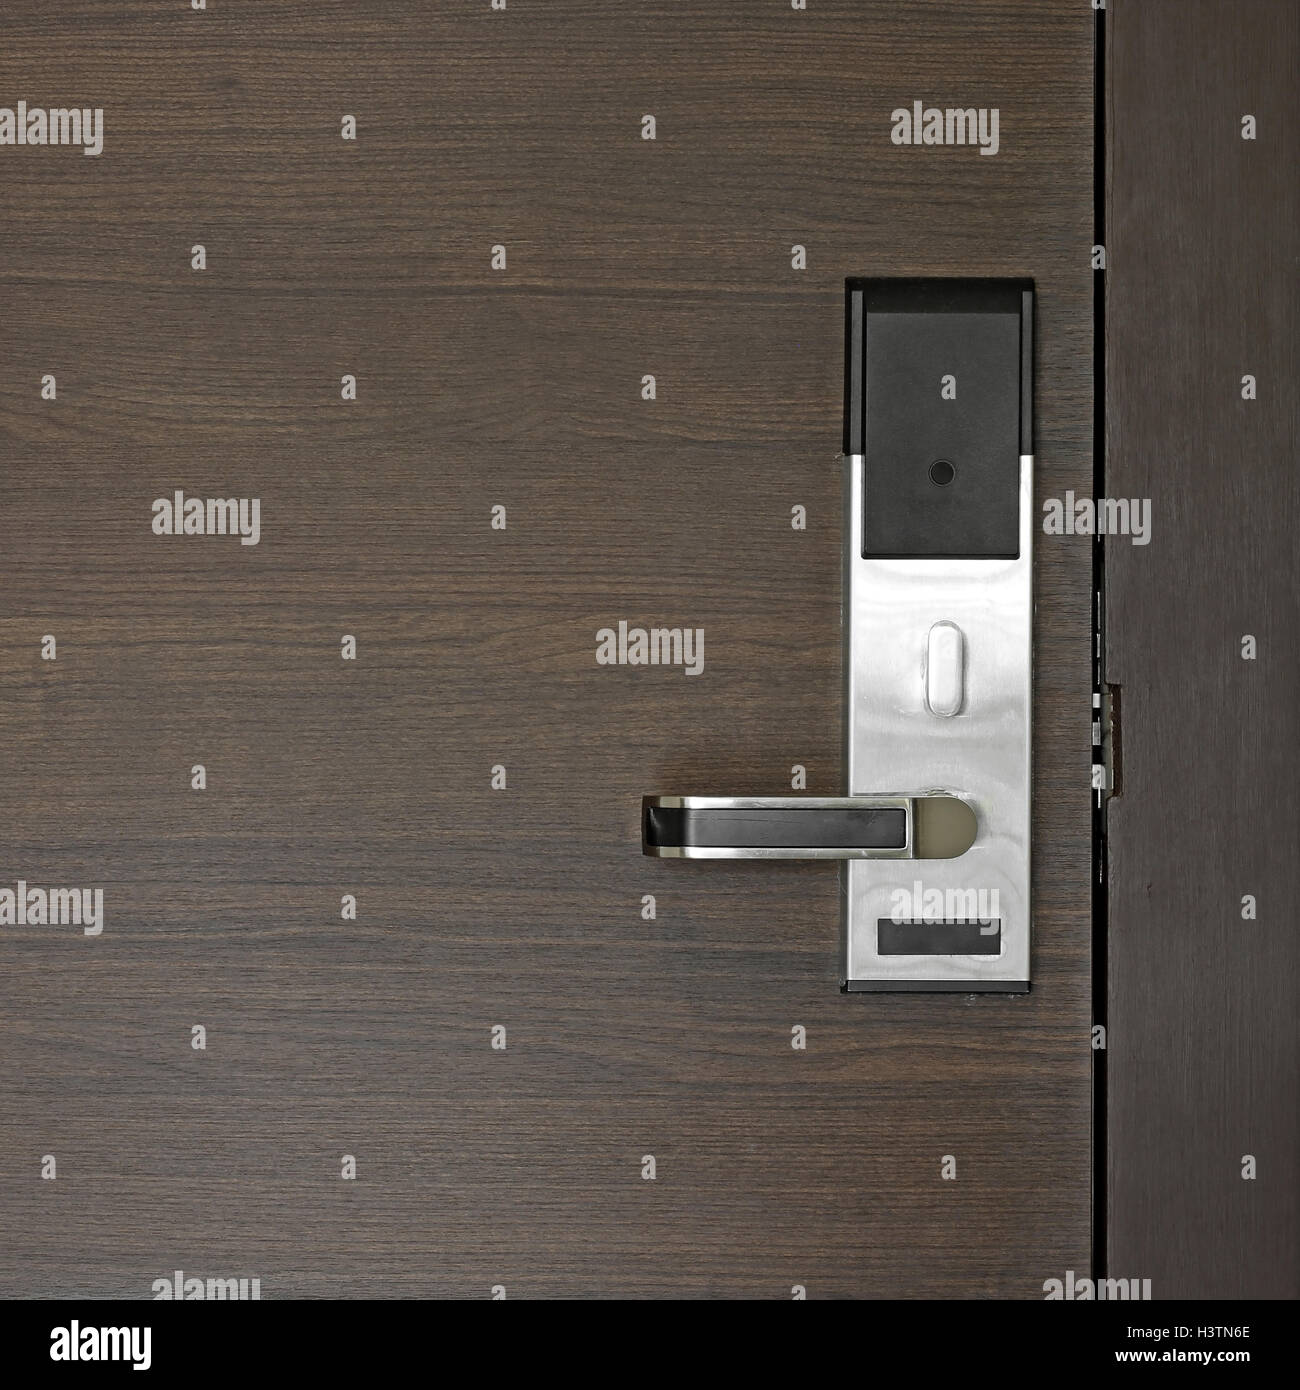 hotel electronic card lock on wooden door Stock Photo